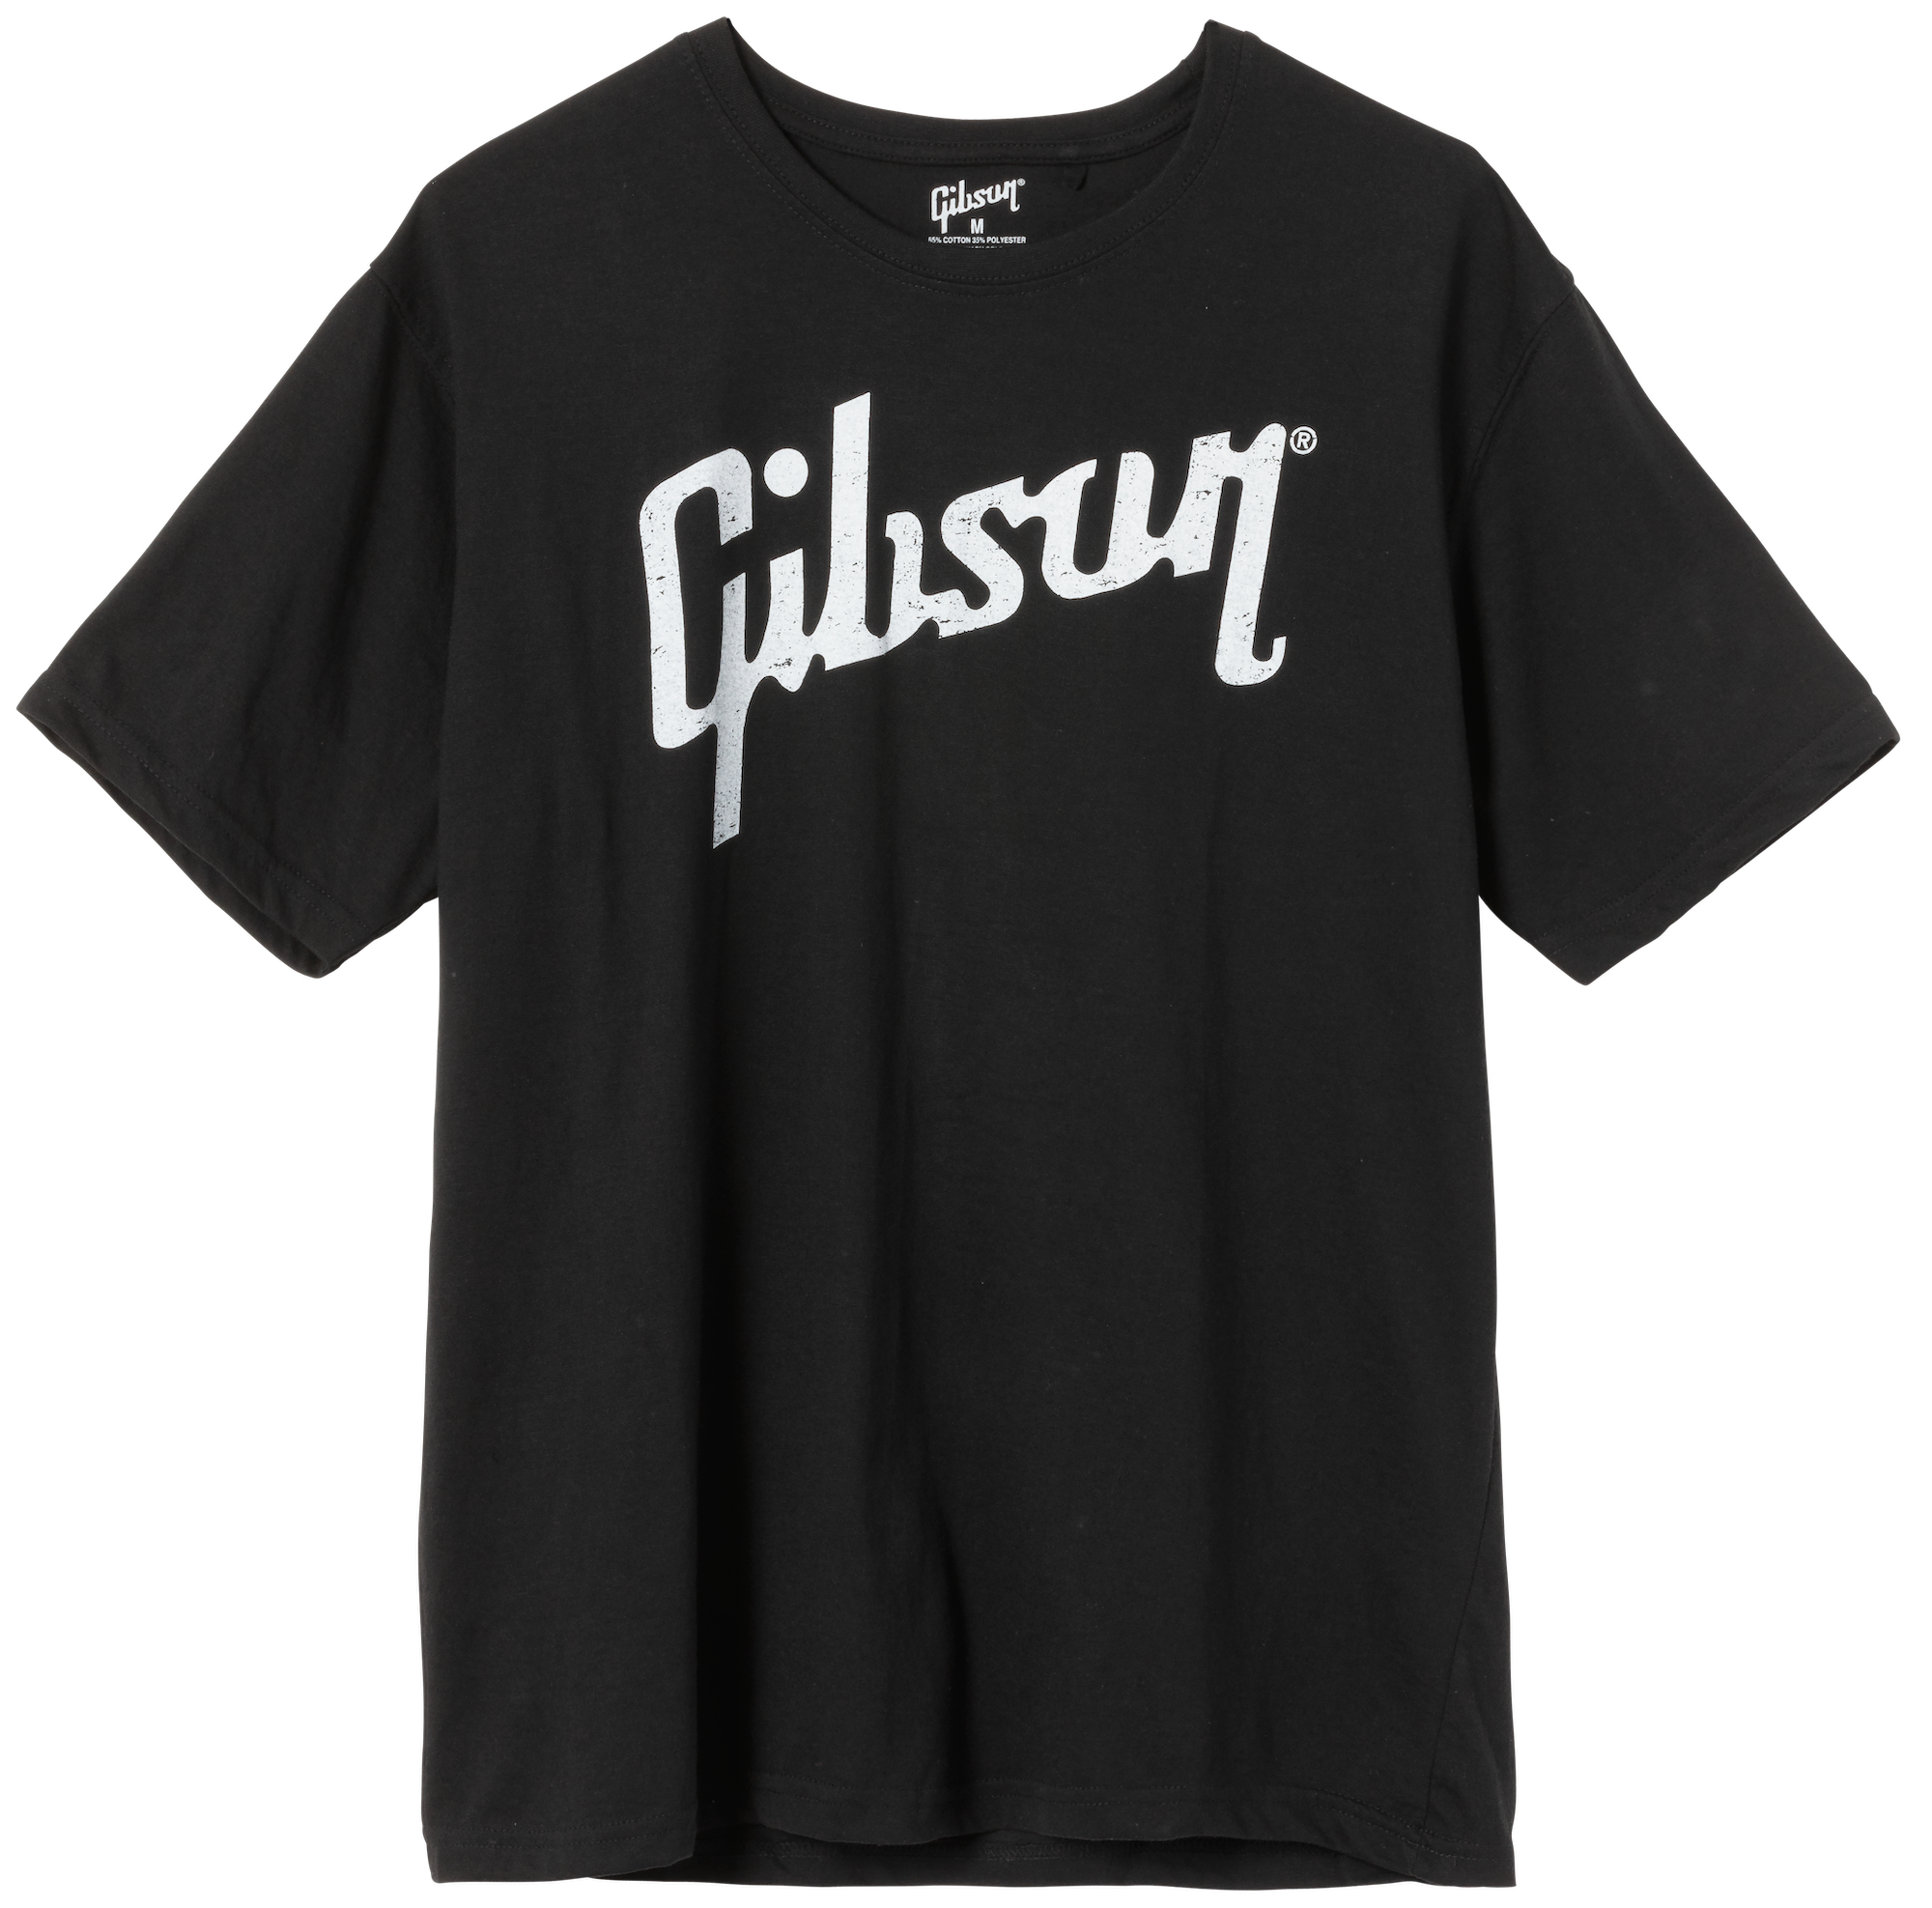 Distressed Gibson Logo T (Black), XL